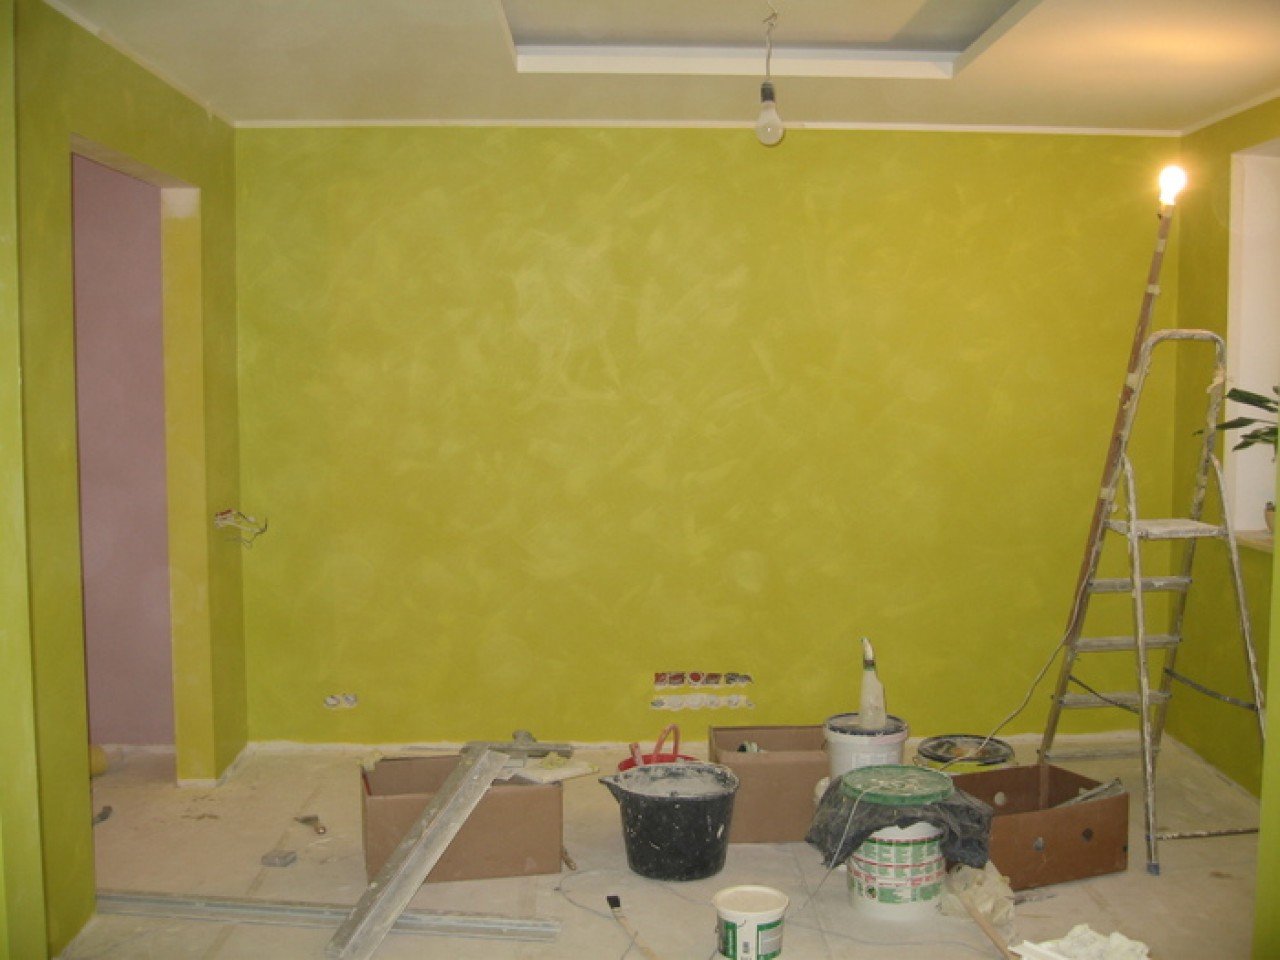 Малярный работа стена. Покраска стен. Покрашенные стены. Покрашенные стены в квартире. Красивая краска для стен в квартире.